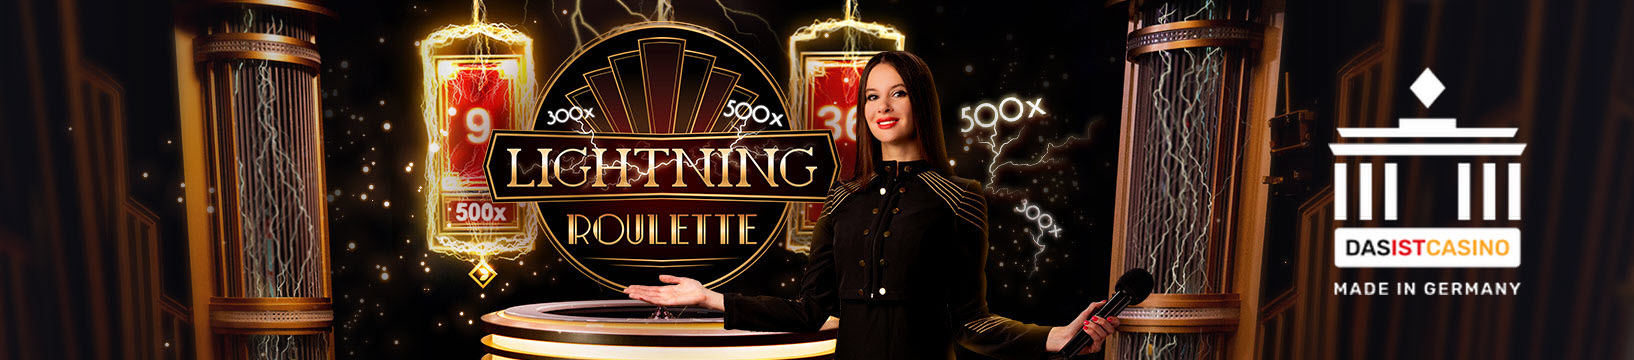 dasistcasino das-lightning-roulette odds casino banner.